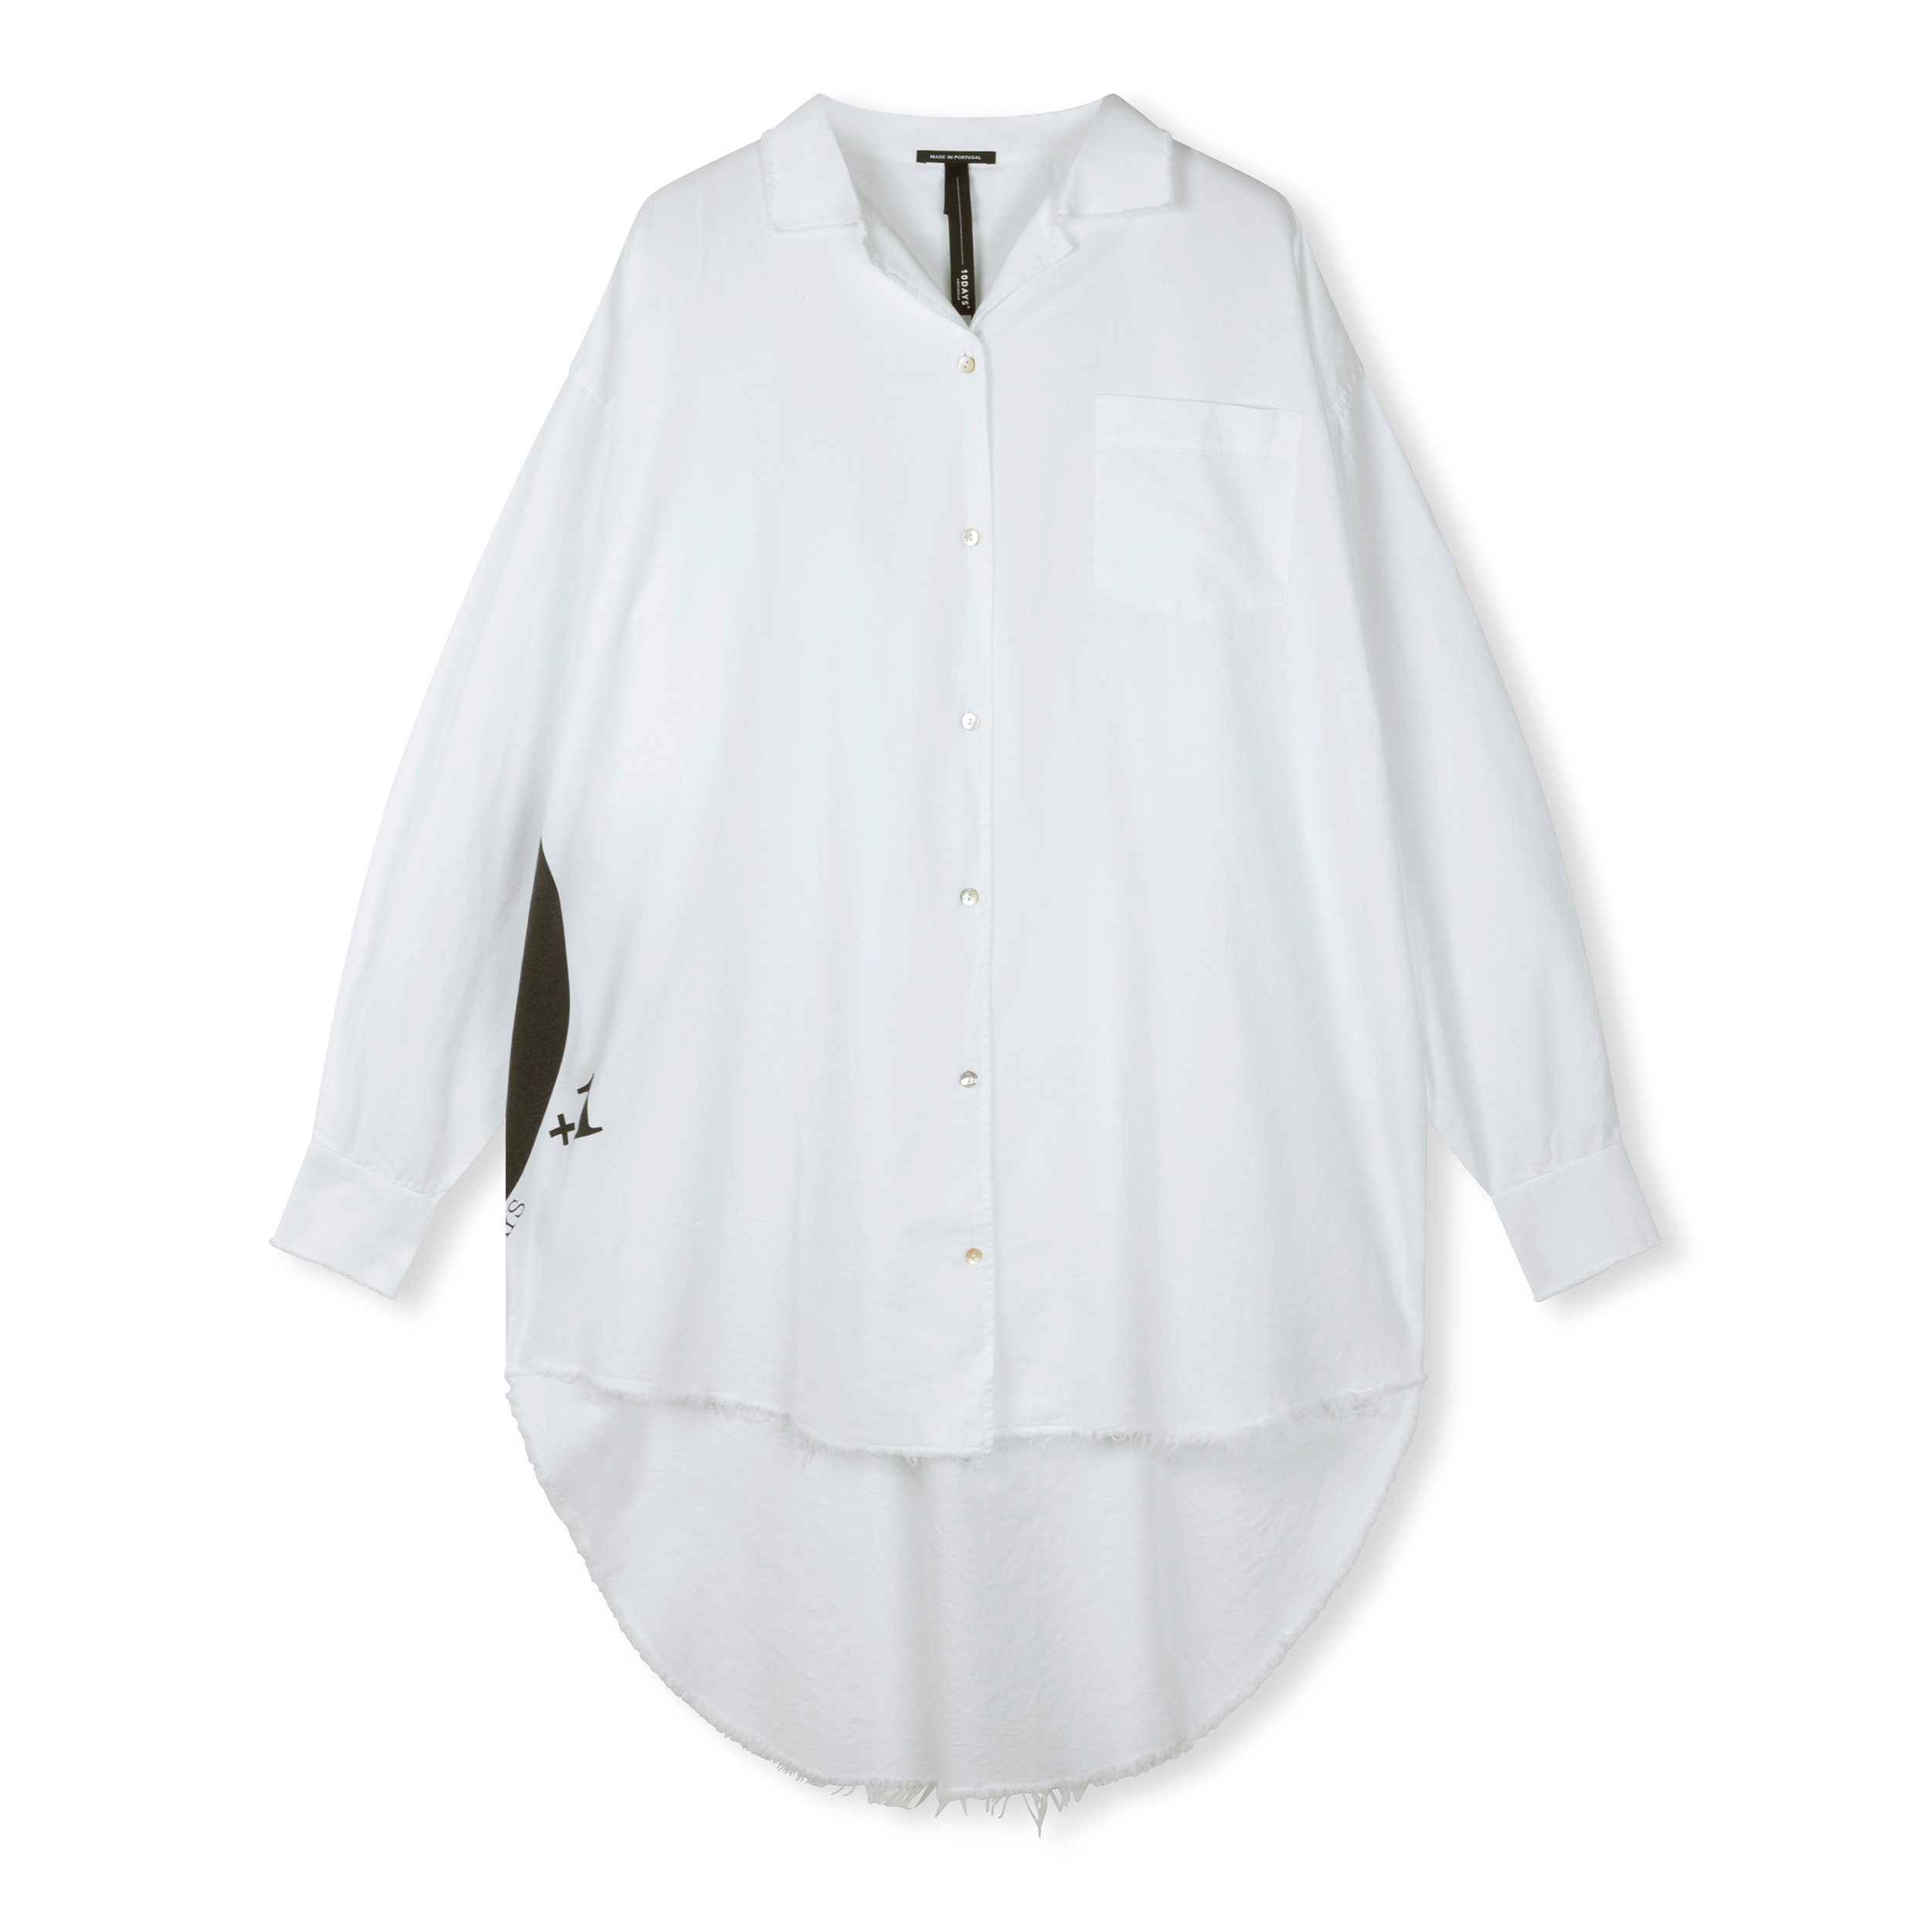 10Days woven shirt white